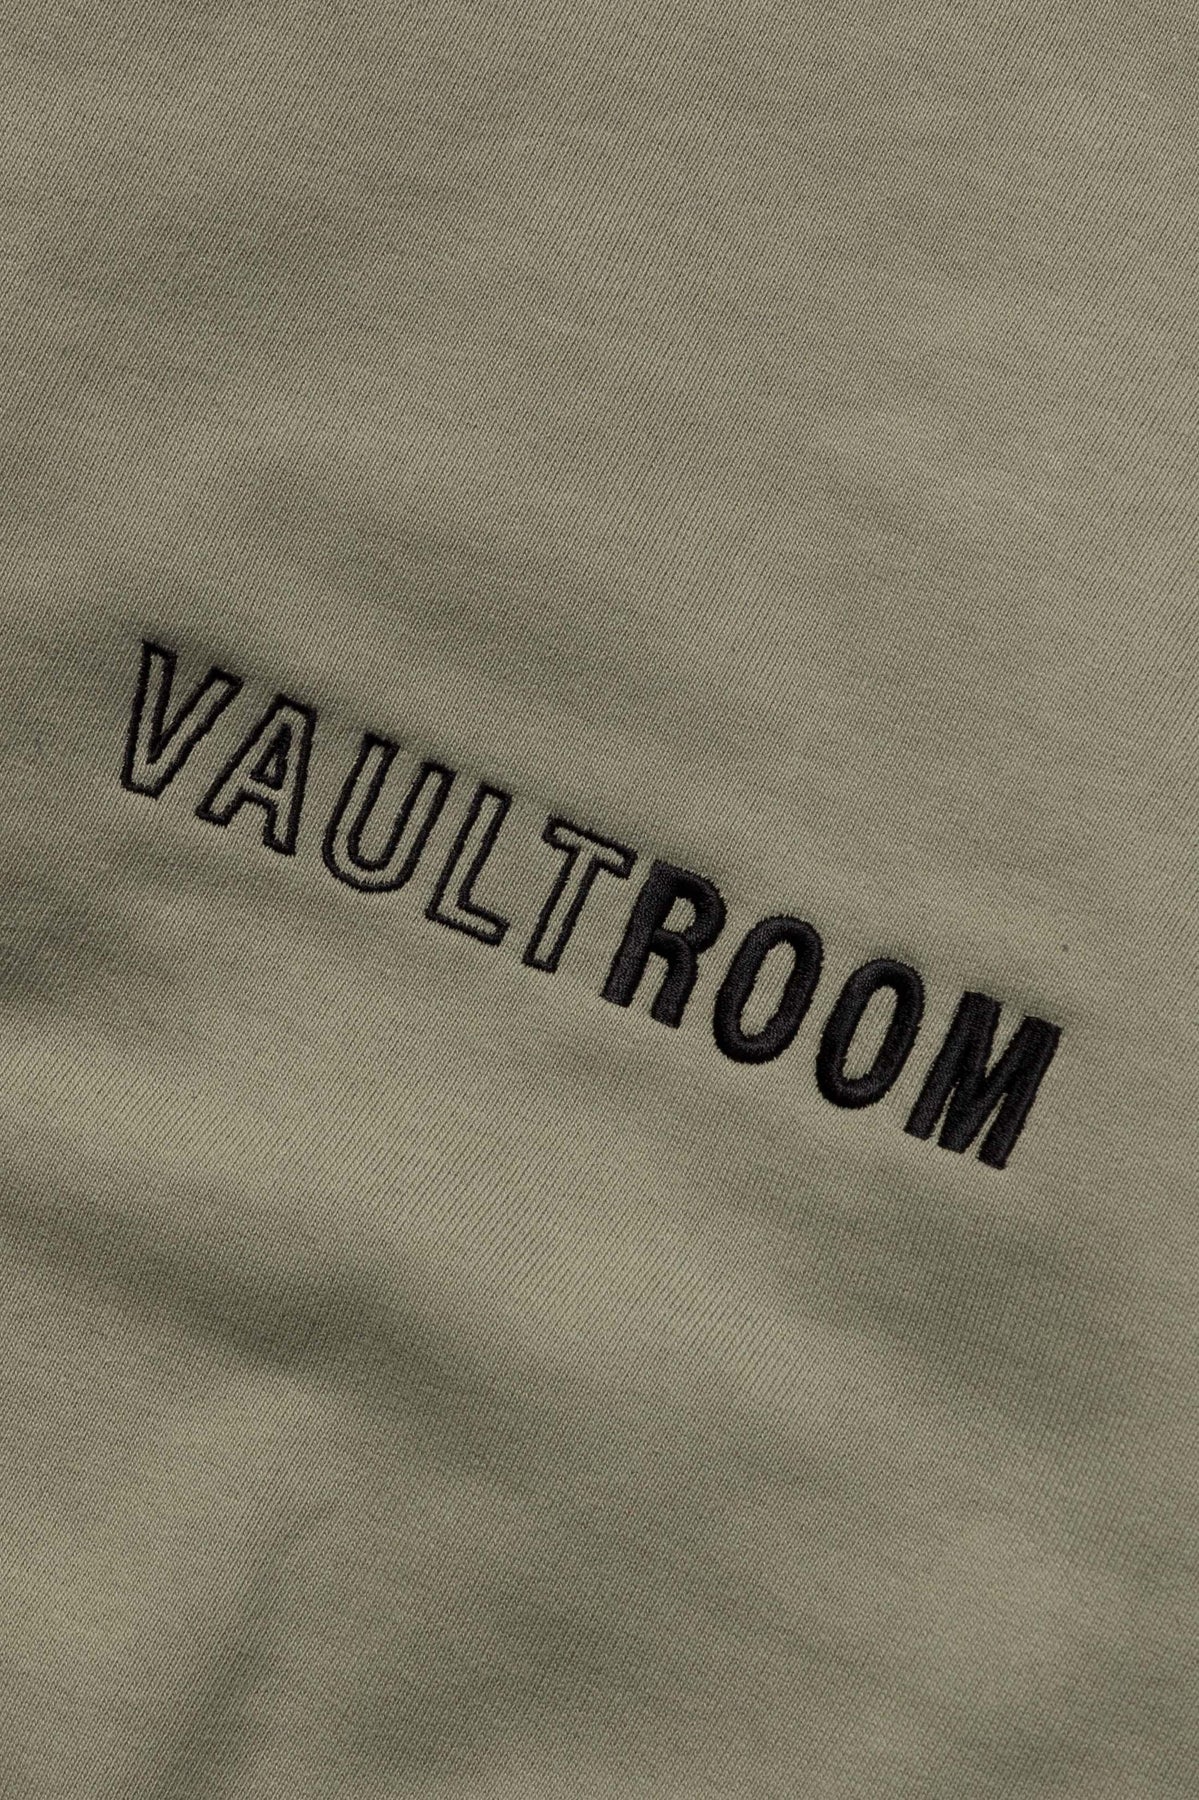 EARTH LOGO HOODIE / KHAKI   vaultroom